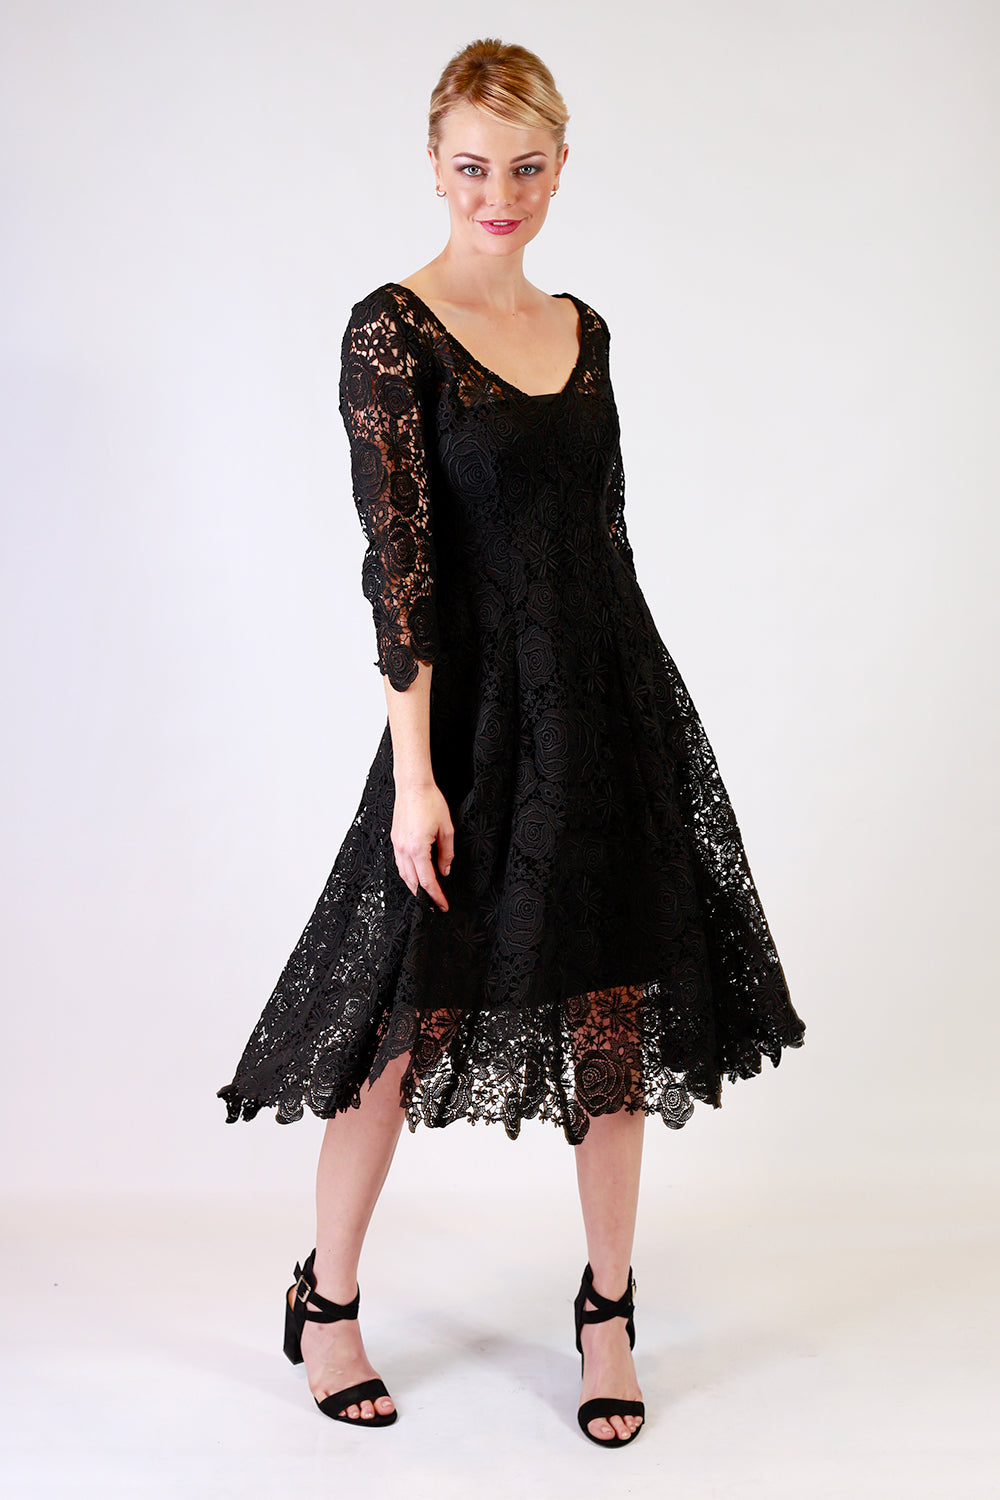 Summer Stunner Lace Dress | Black and White Lace Dress | Autumn Winter 19 Annah Stretton Fashion NZ